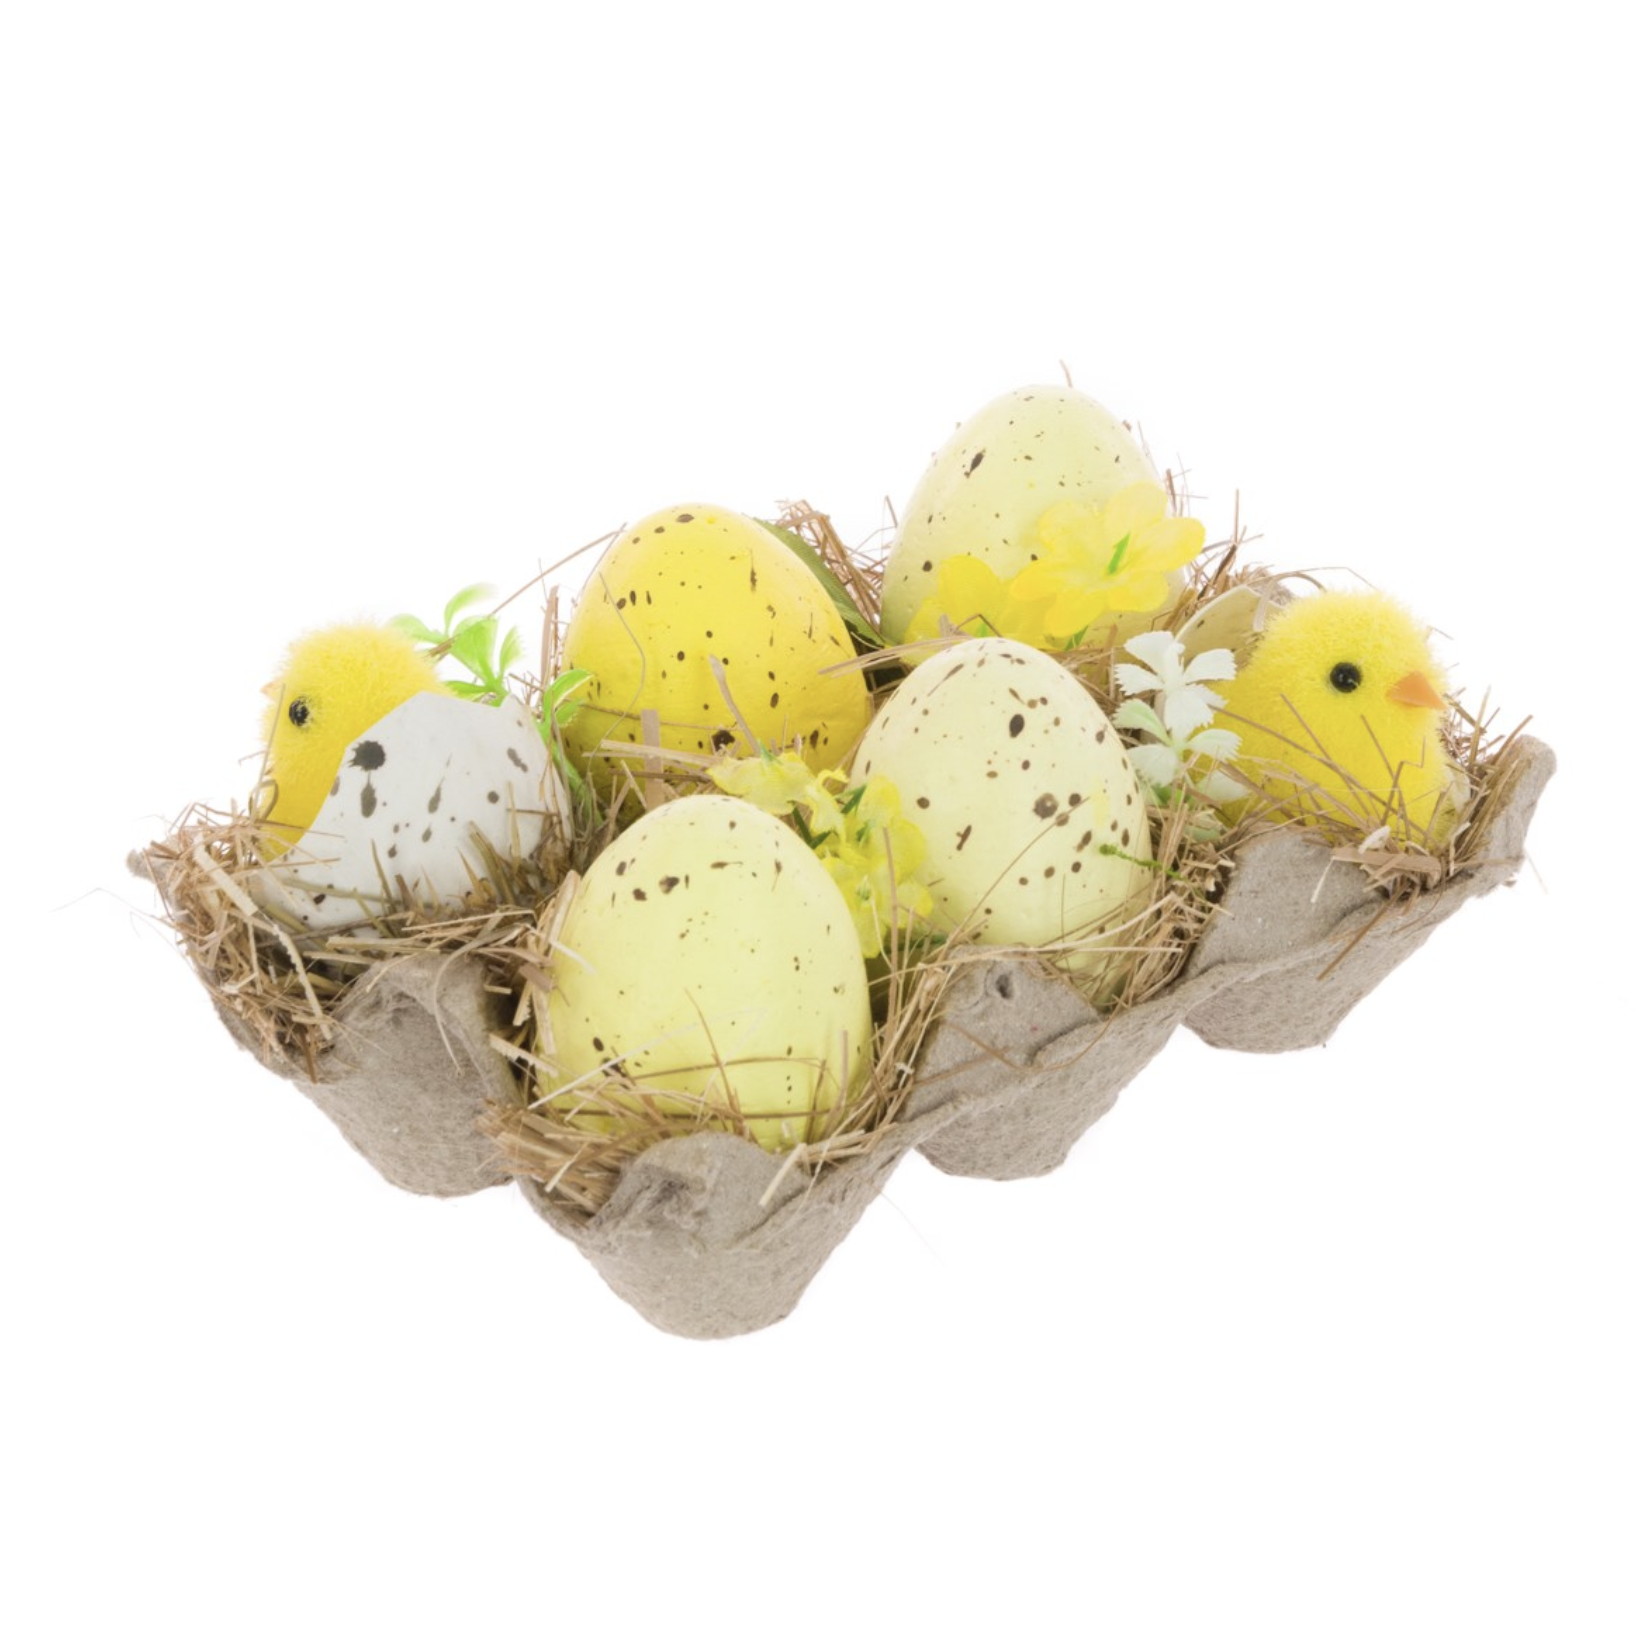 FloralSilk Speckled Eggs with Chicks Novelty Easter Decoration